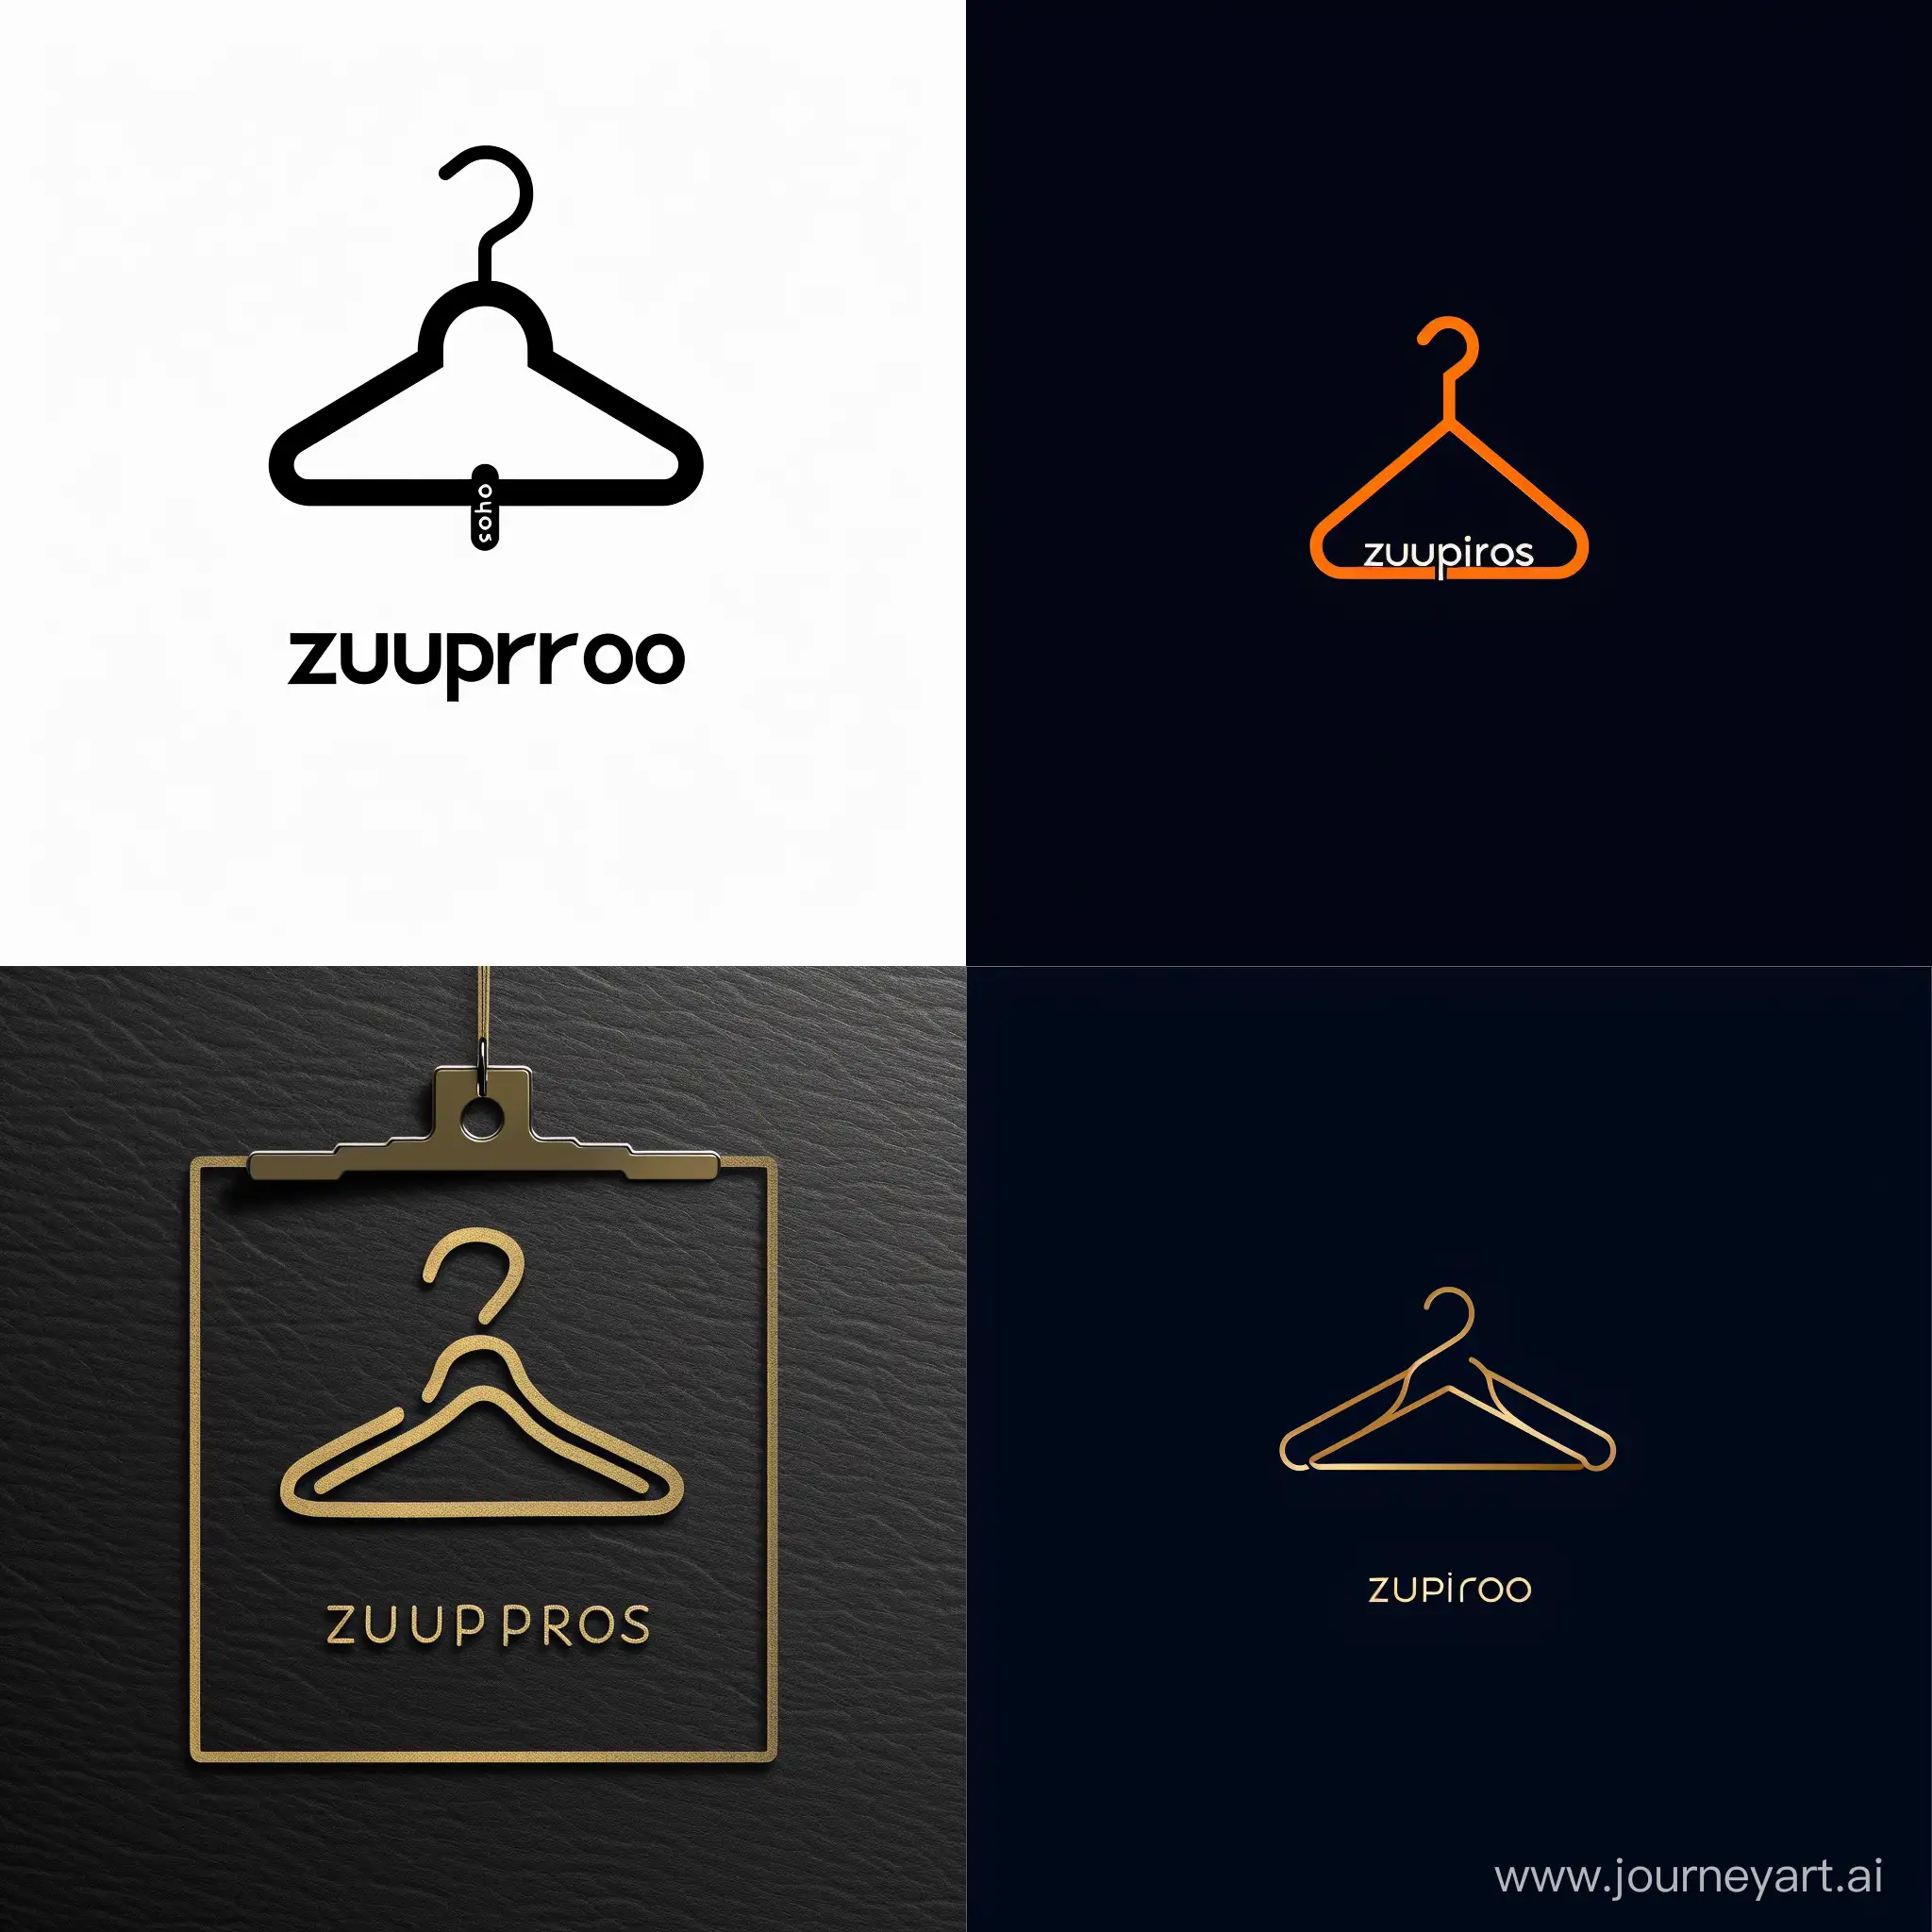 zupiros logo with hanger symbol